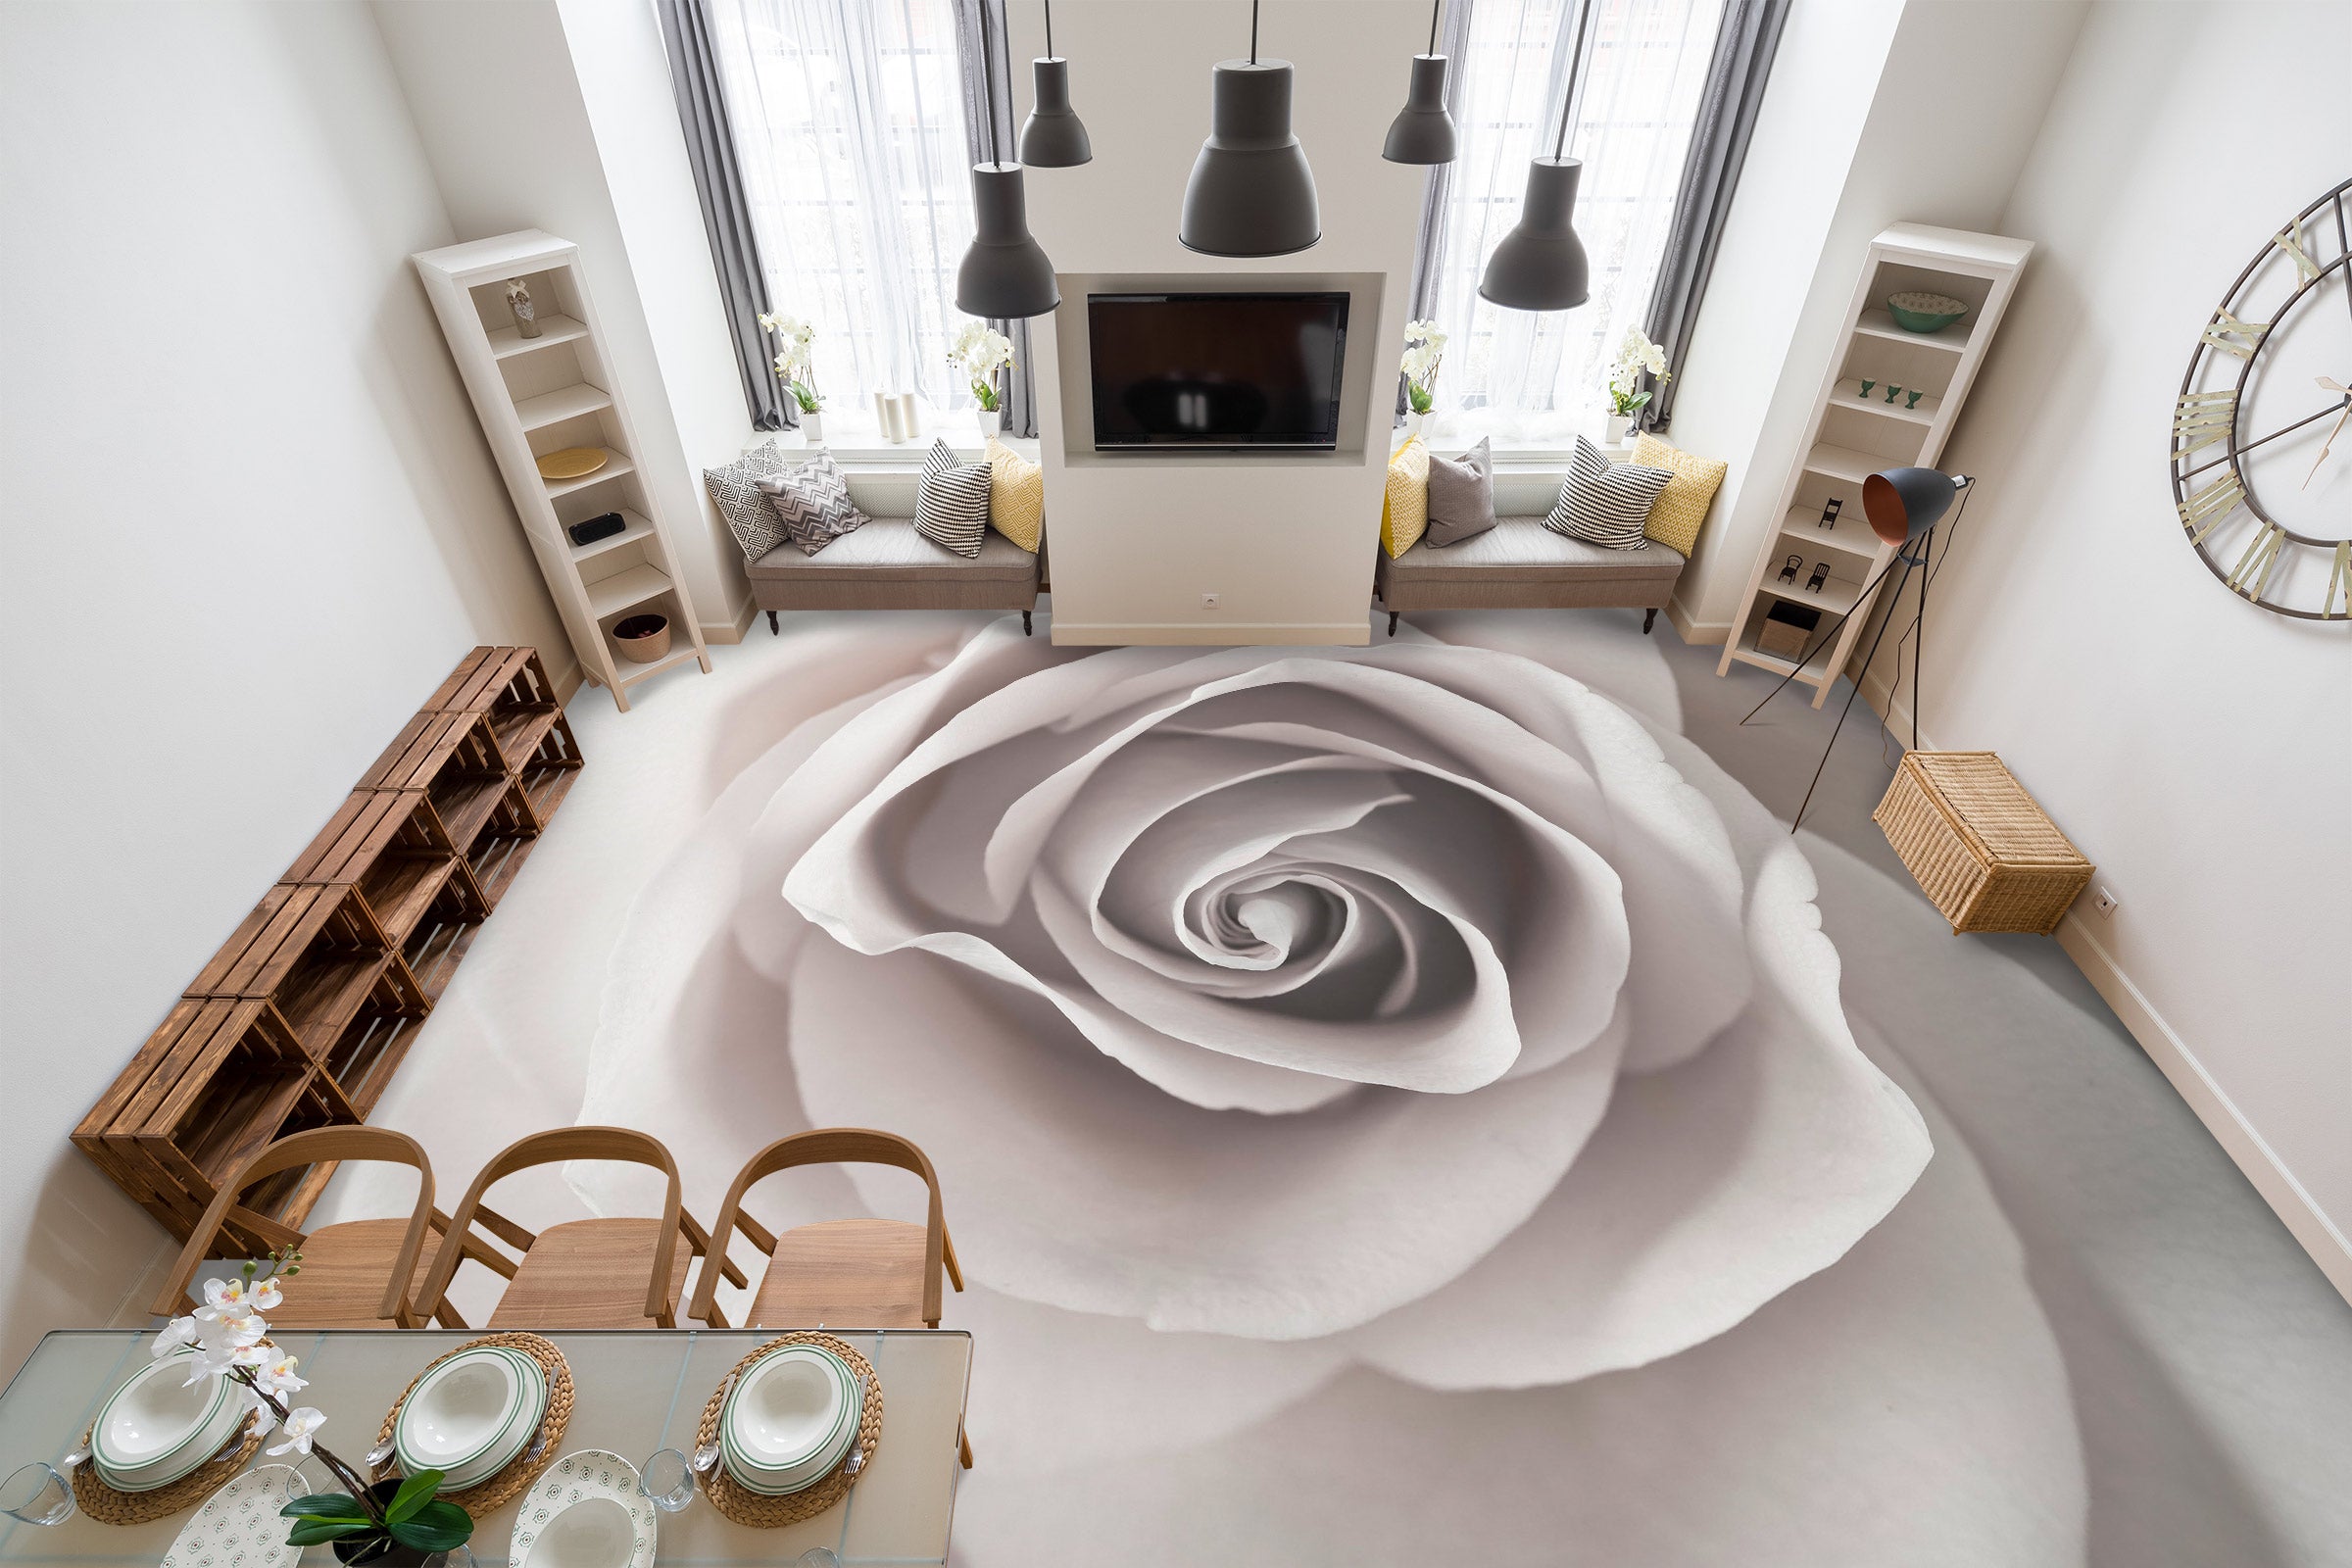 3D Rose Pattern 9844 Assaf Frank Floor Mural  Wallpaper Murals Self-Adhesive Removable Print Epoxy